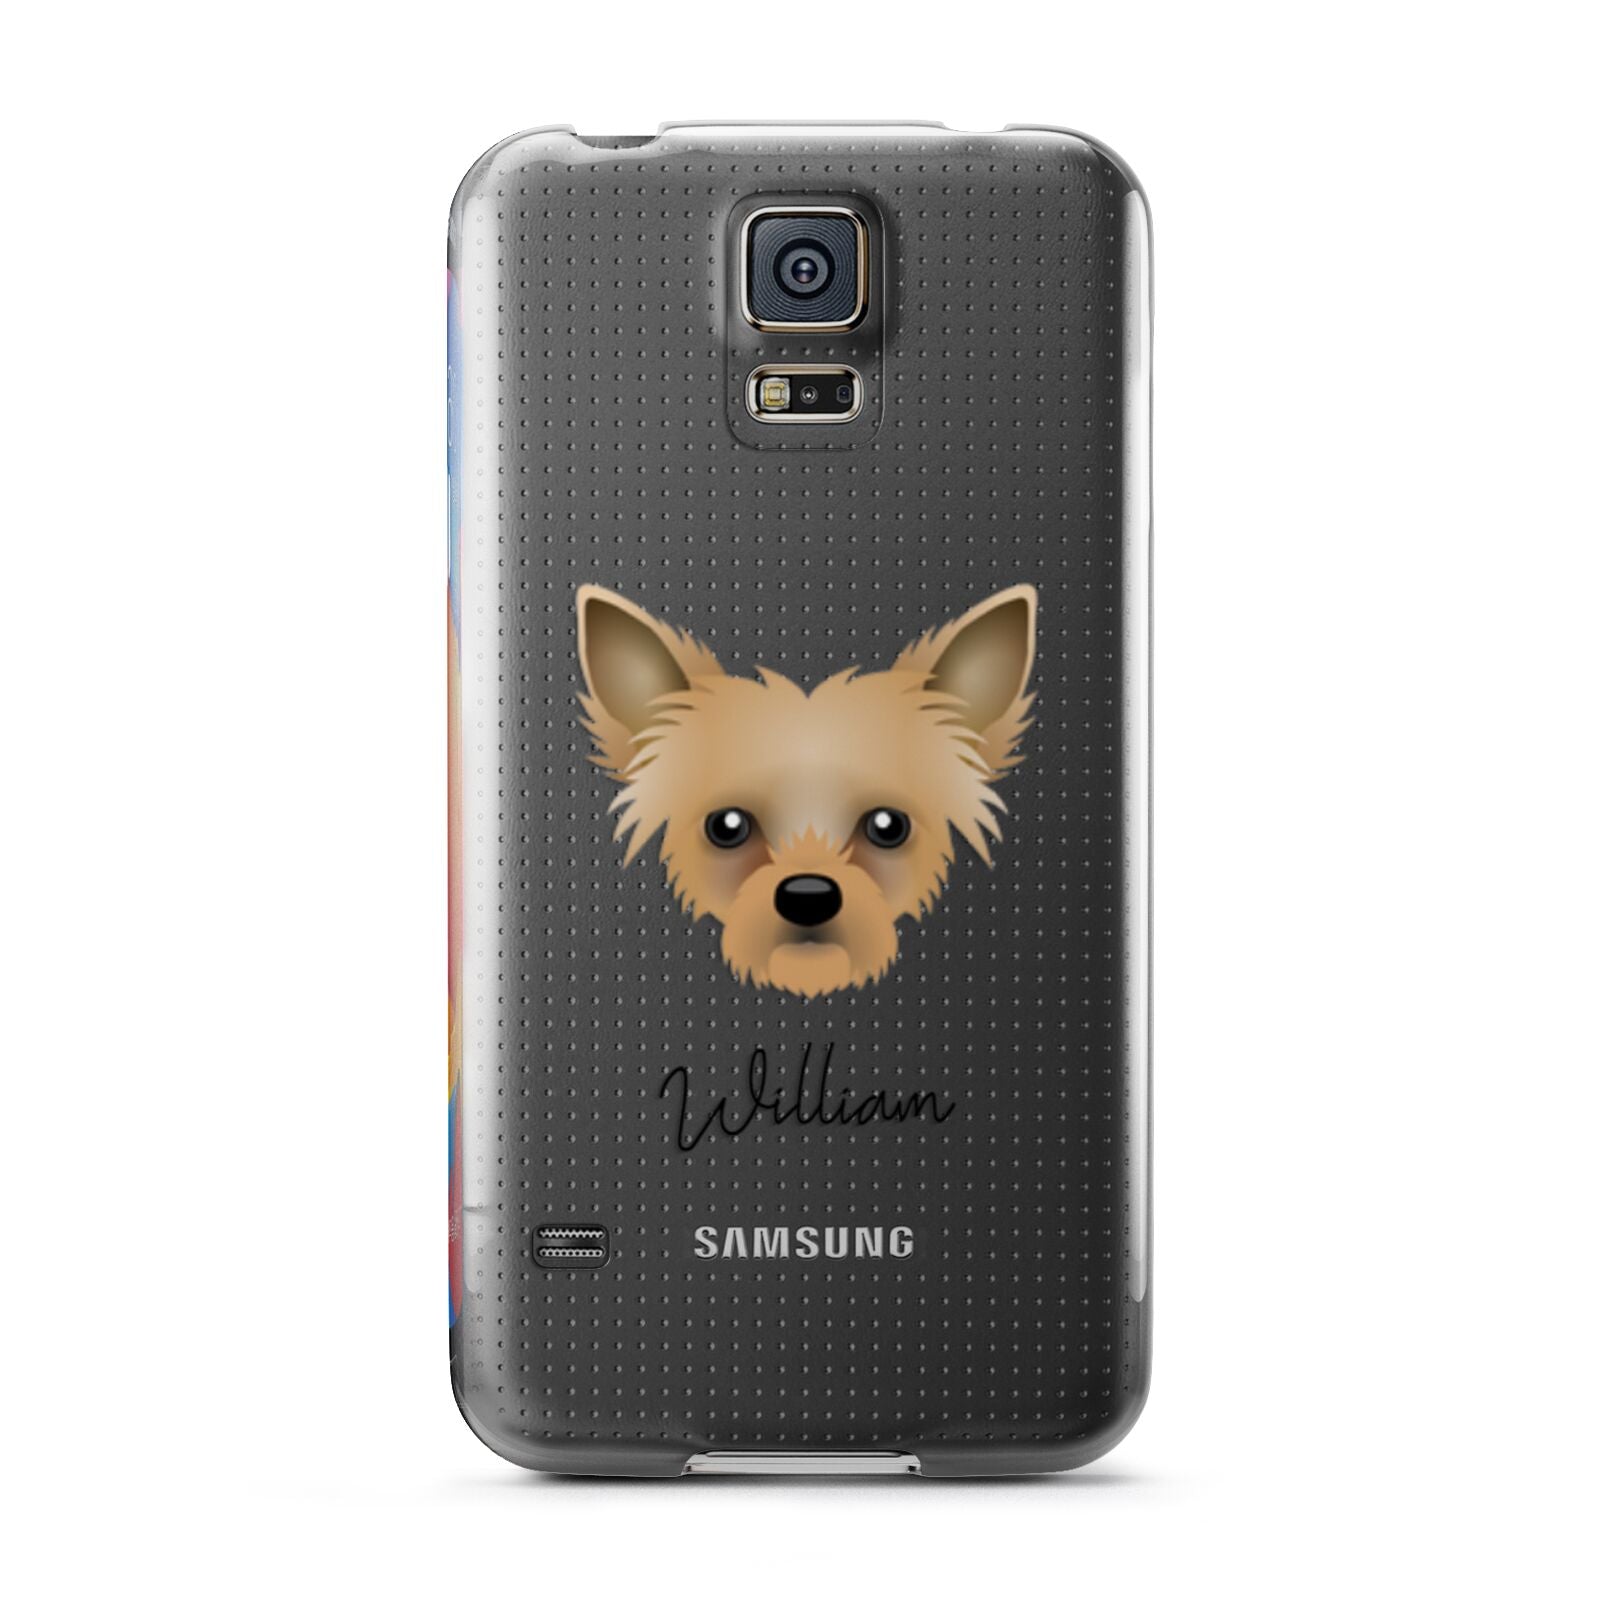 Chipoo Personalised Samsung Galaxy S5 Case